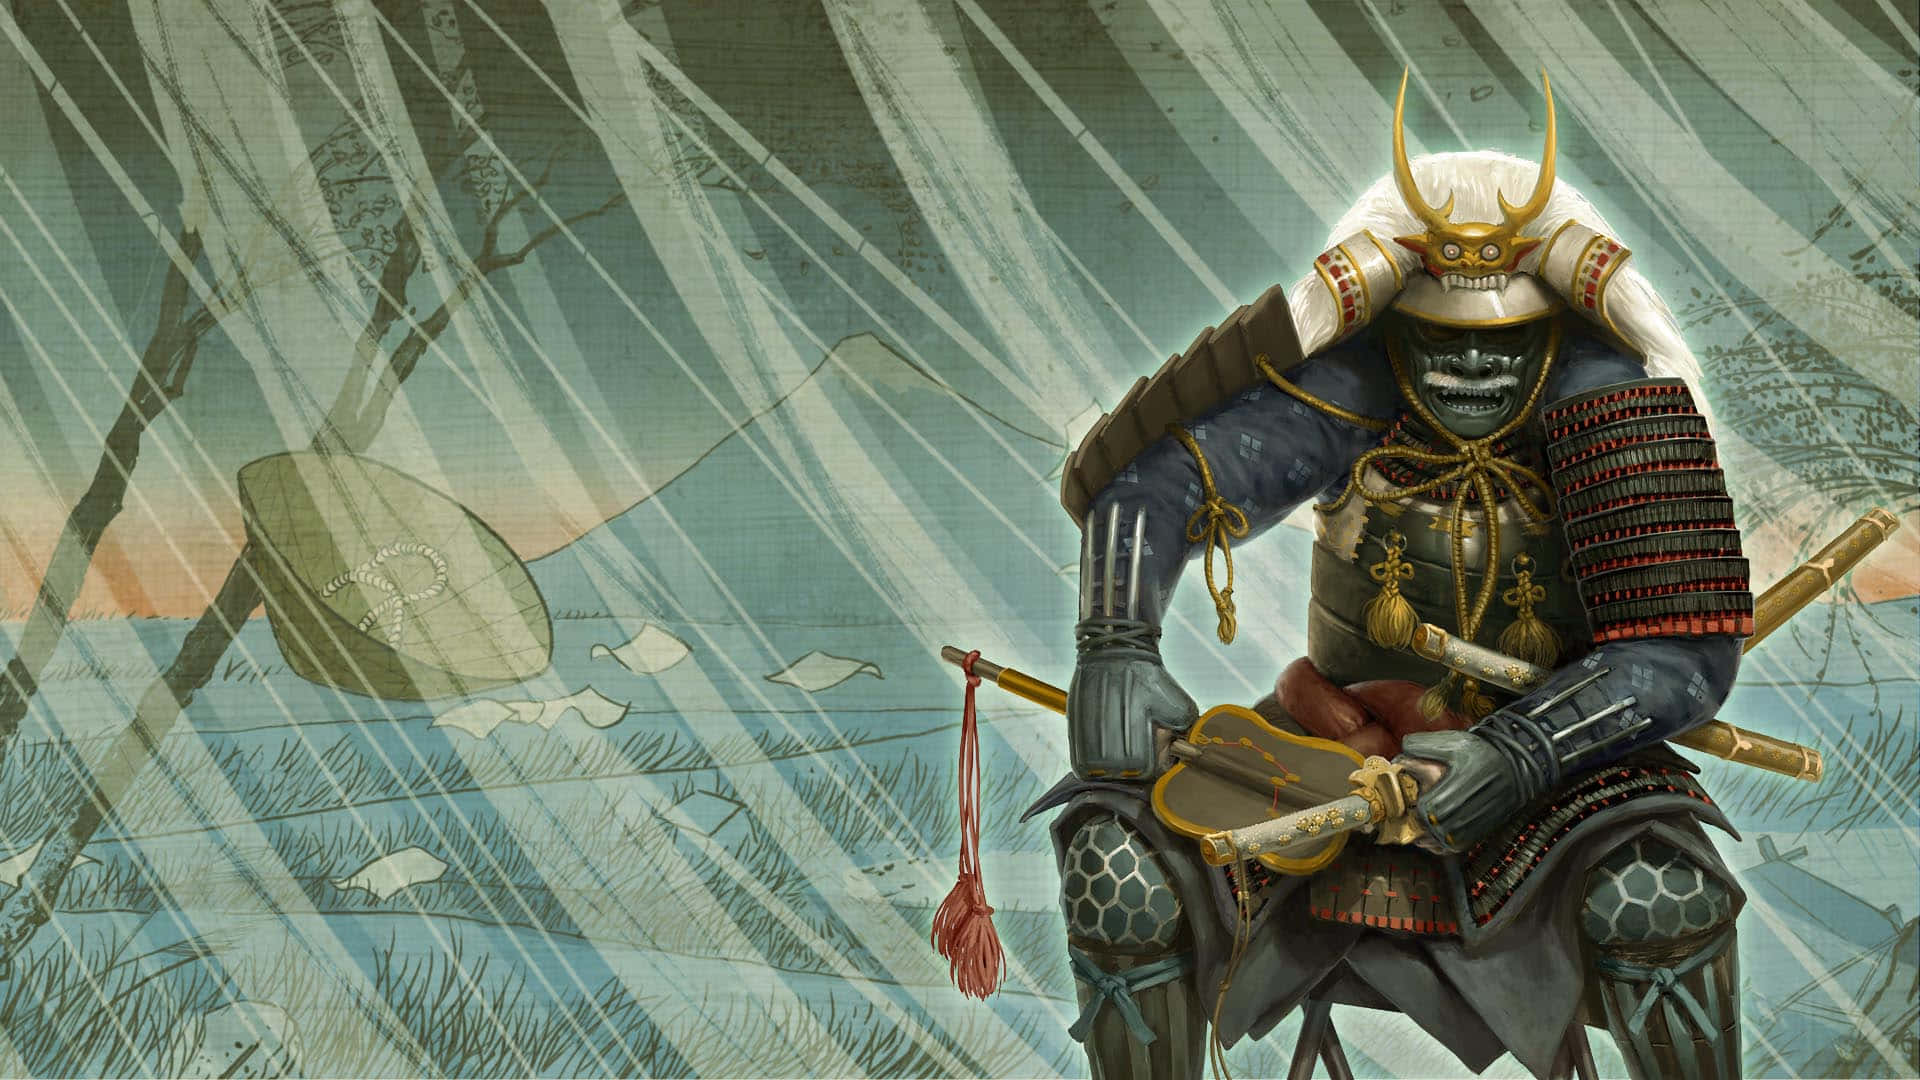 Erobramedeltida Japan I Det Episka Strategispelet Best Total War Shogun 2.